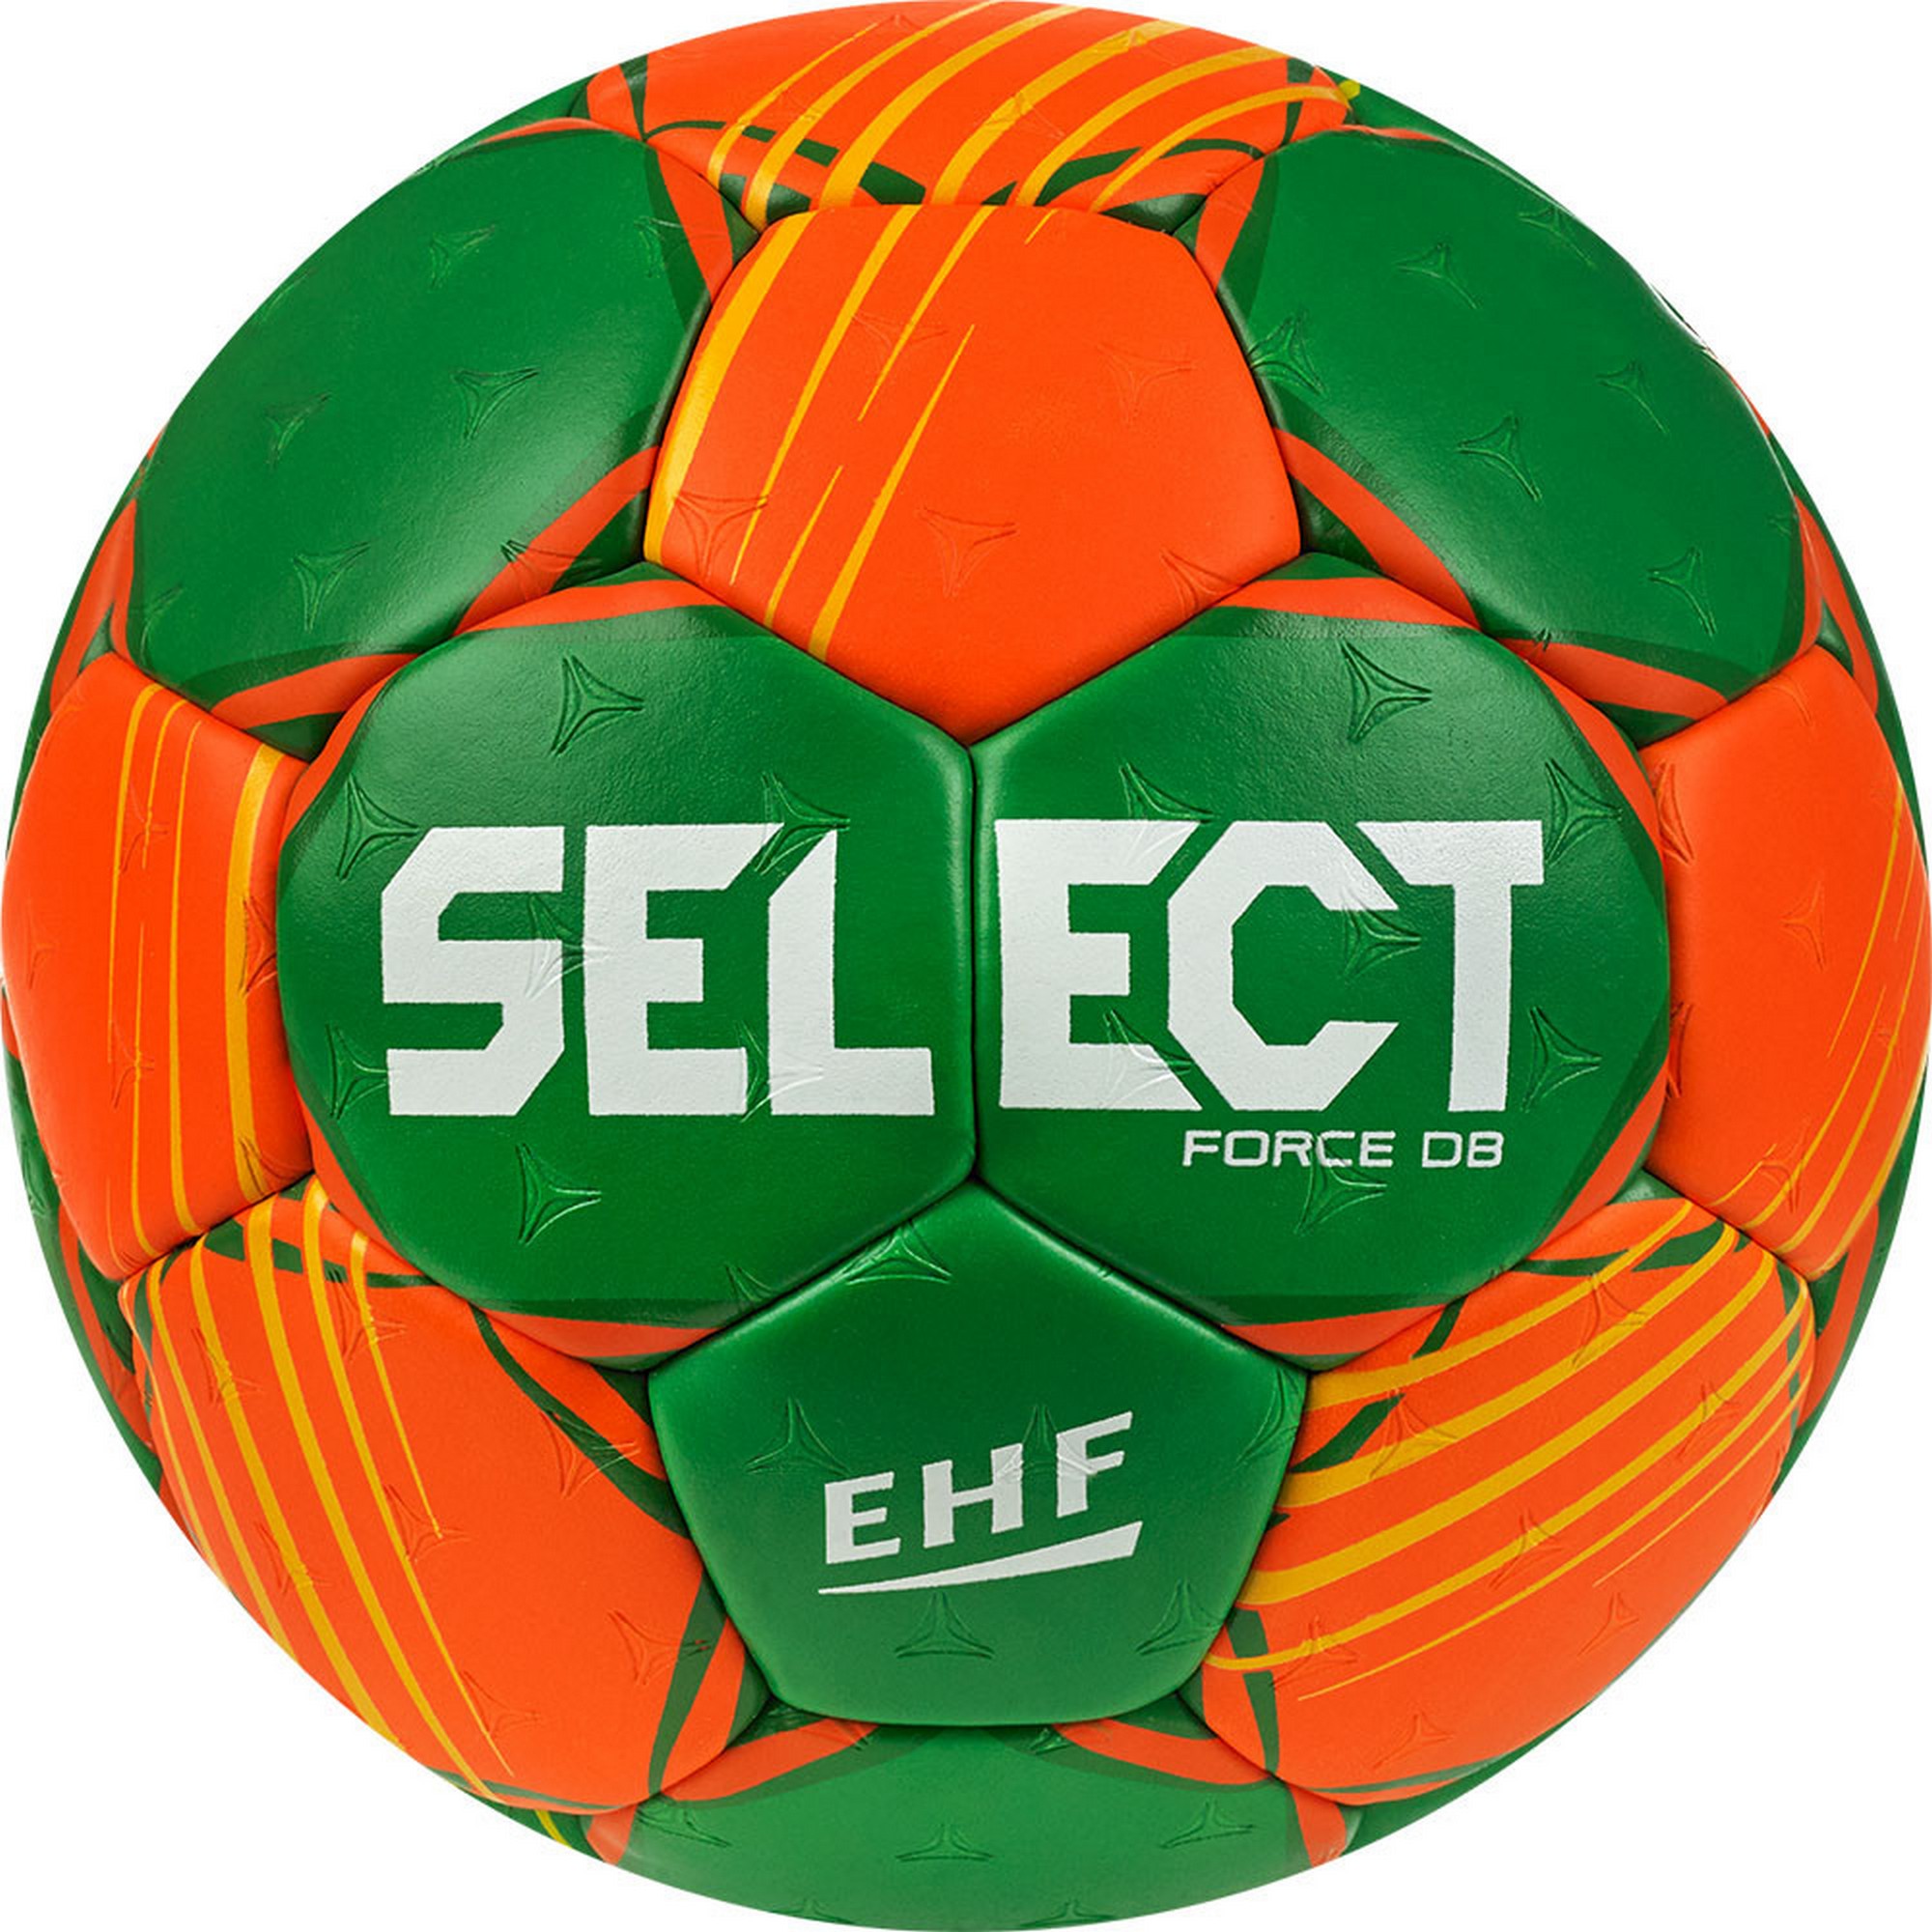   Select FORCE DB V22 1621854446 EHF Appr, .2